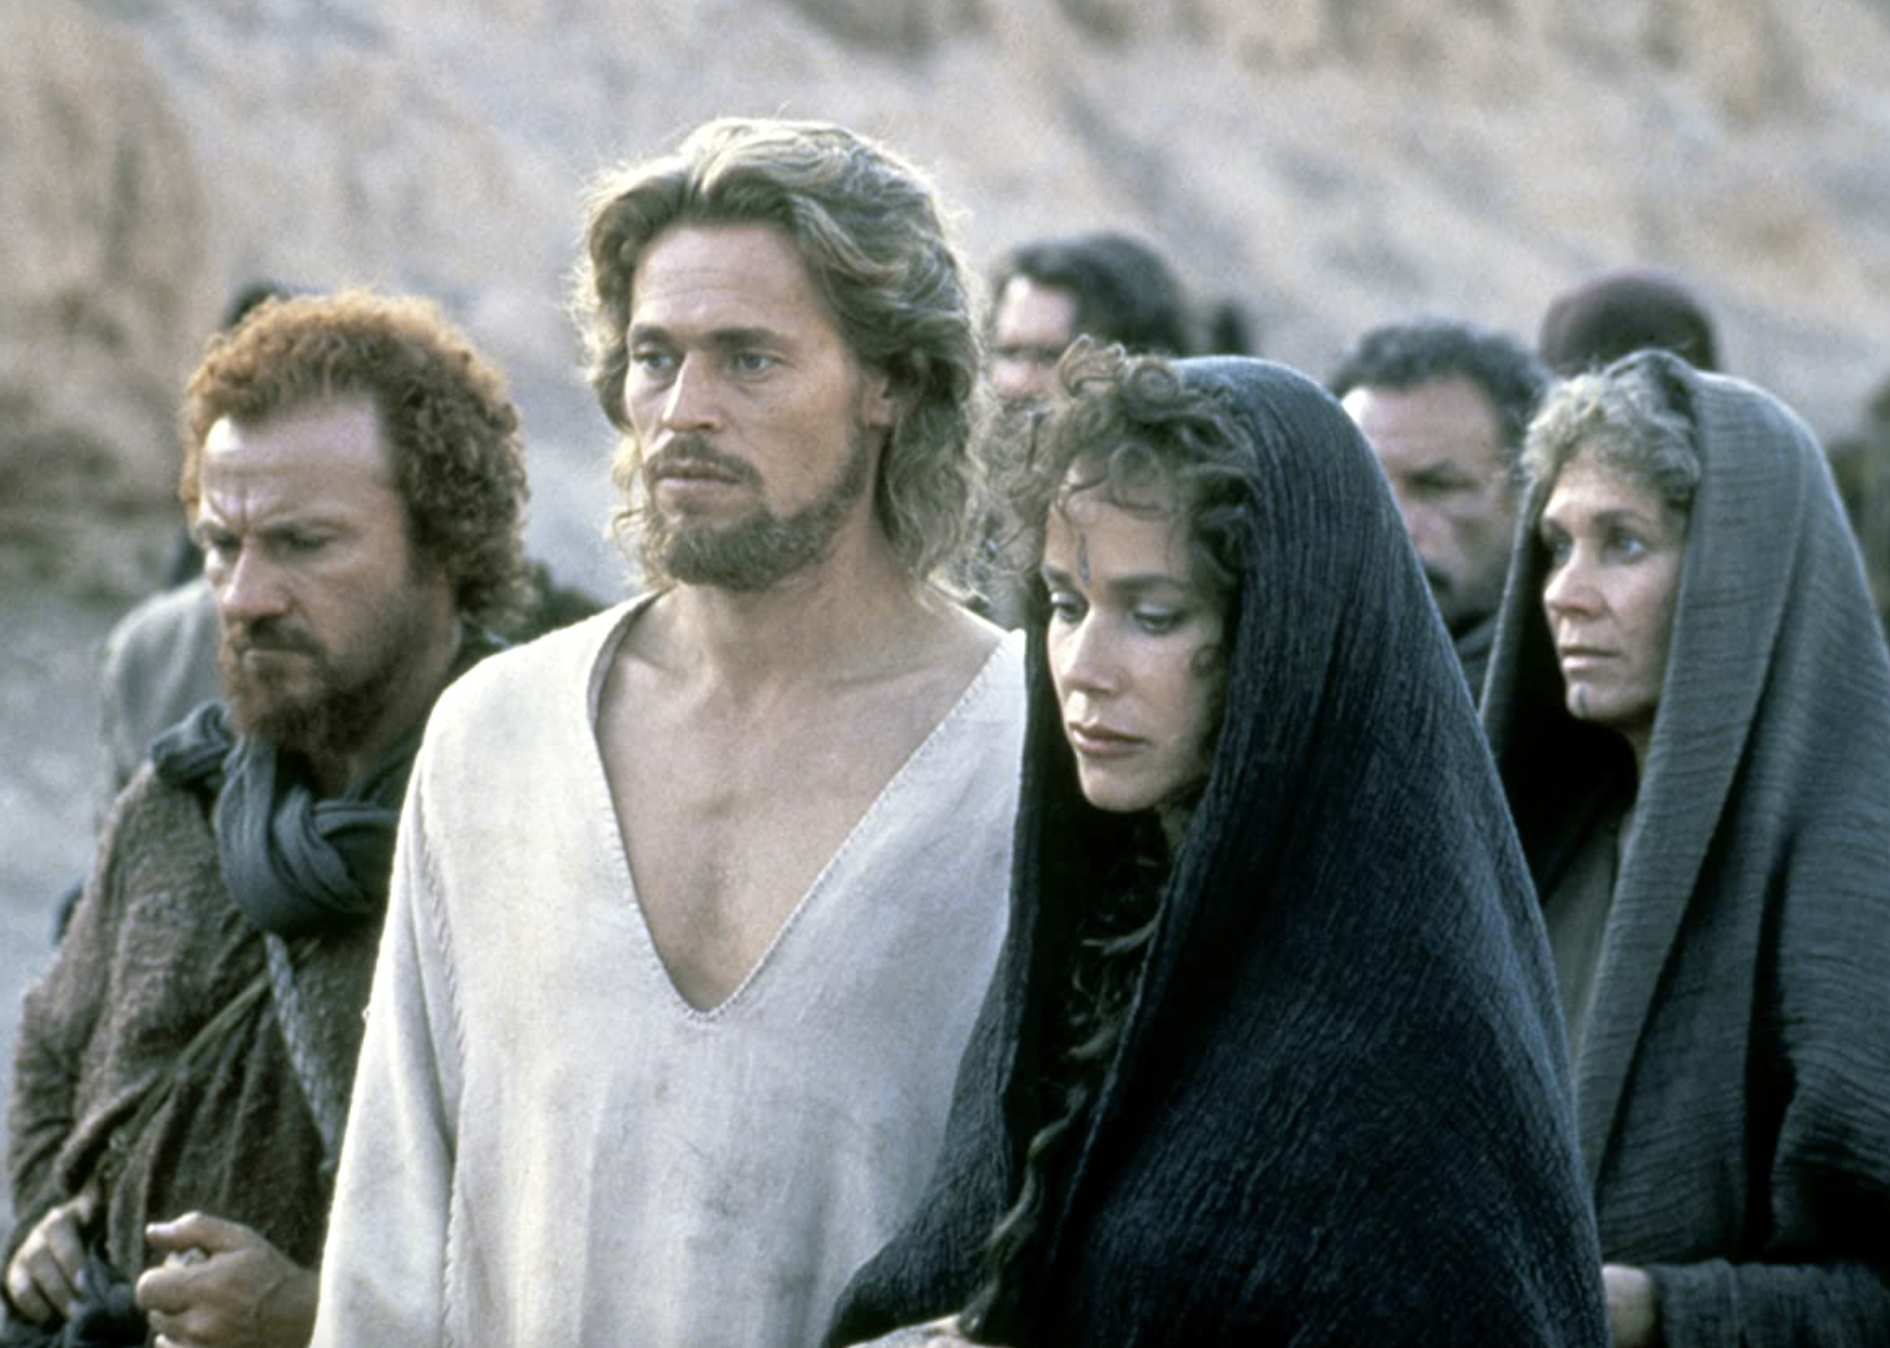 Harvey Keitel, Willem Dafoe, Barbara Hershey, Victor Argo, and Verna Bloom in "The Last Temptation of Christ".